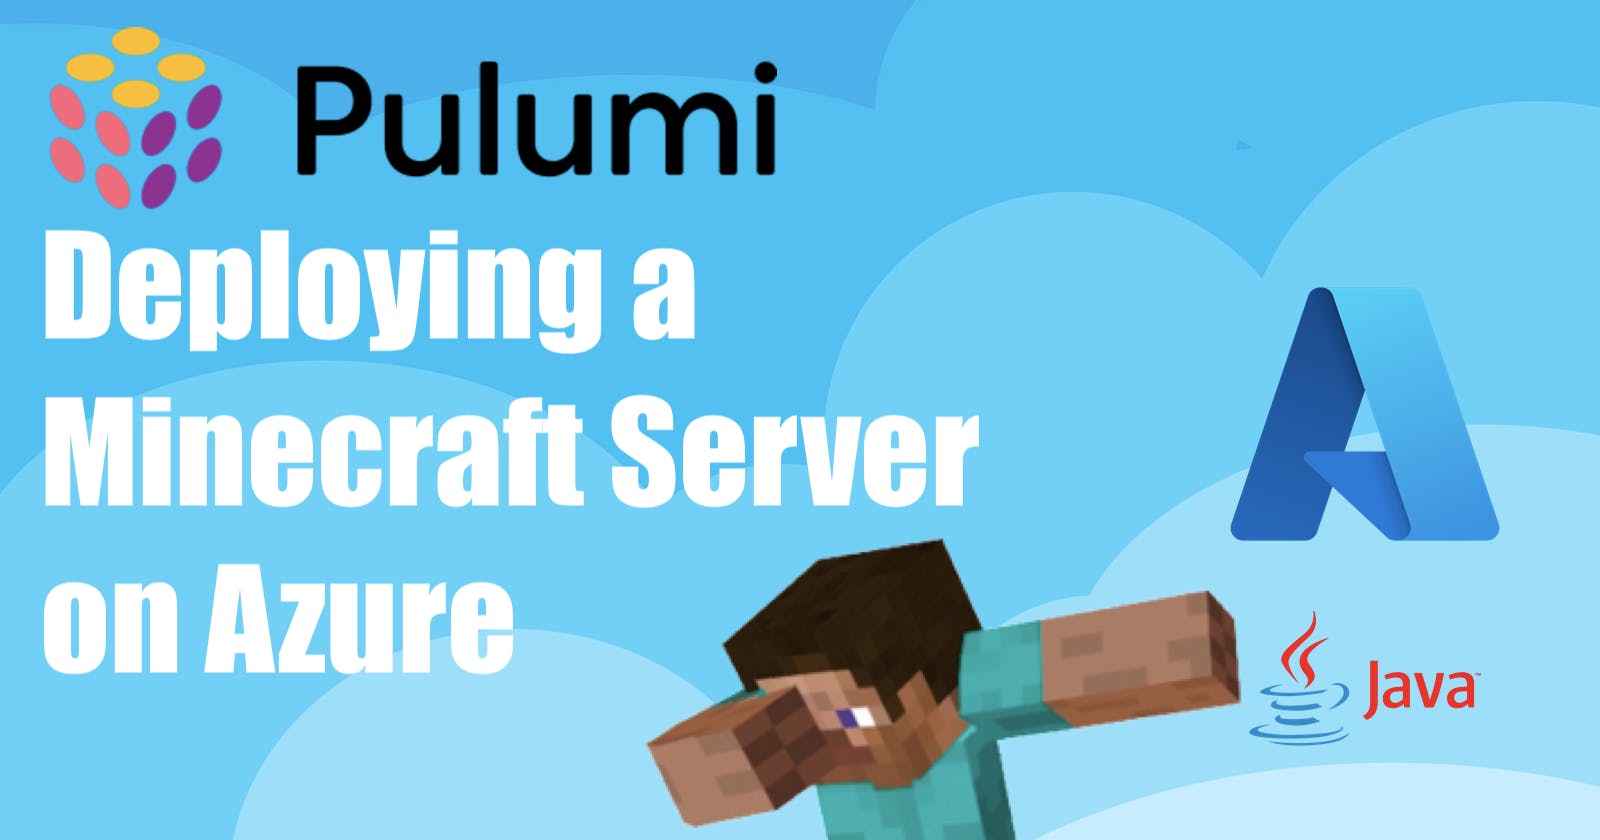 Pulumi Java: Deploying a Minecraft Server on Azure AKS